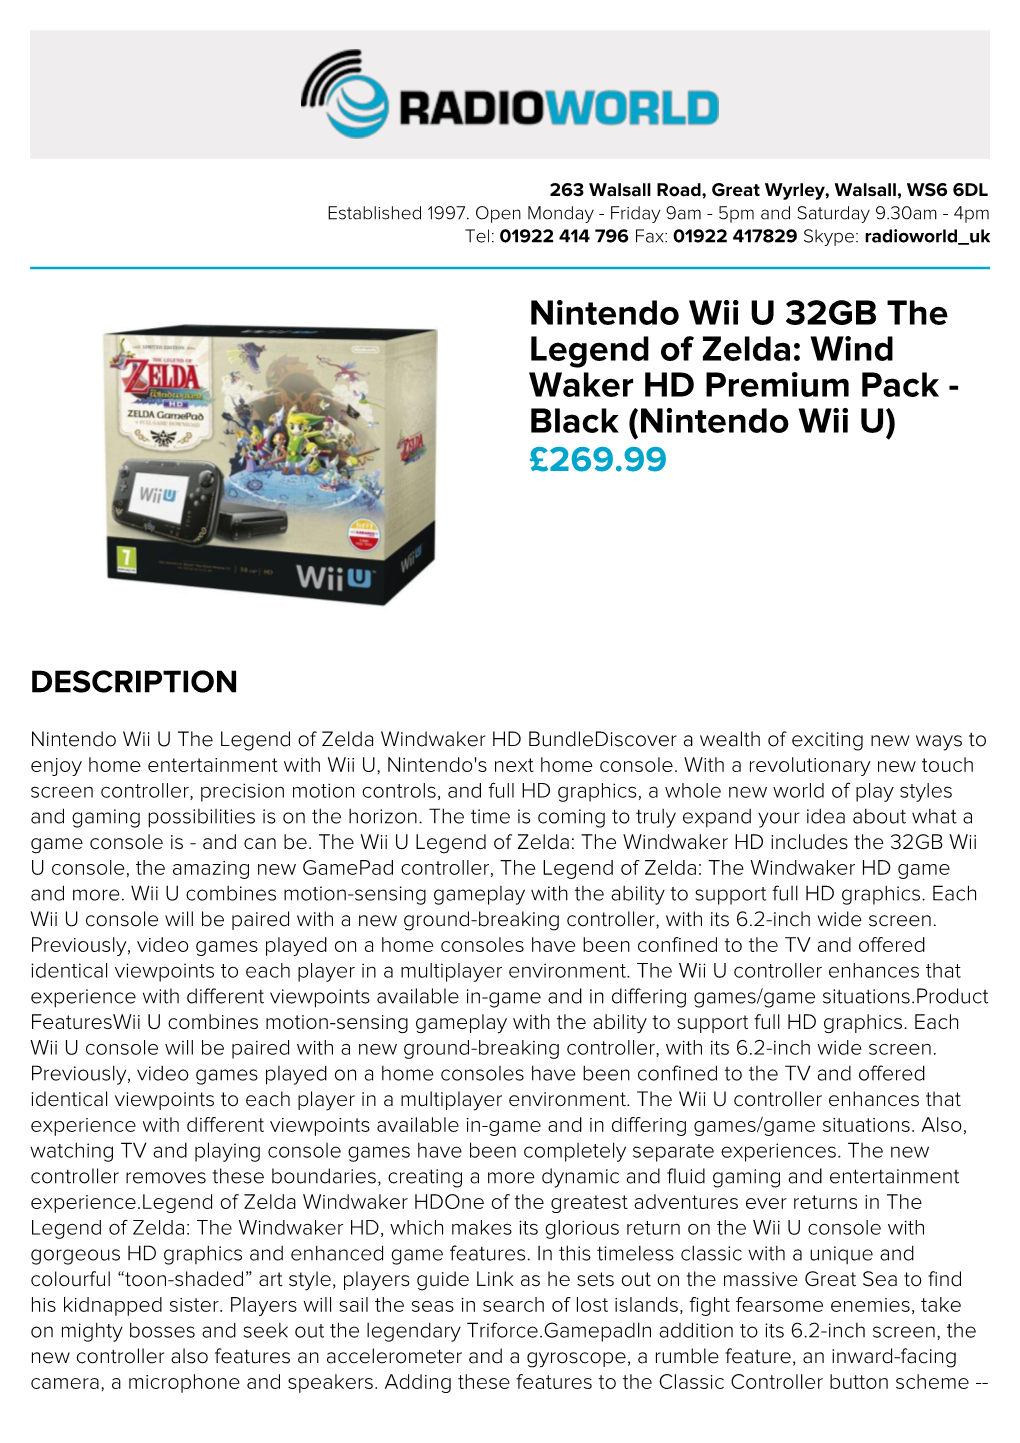 Nintendo Wii U 32GB the Legend of Zelda: Wind Waker HD Premium Pack - Black (Nintendo Wii U) £269.99